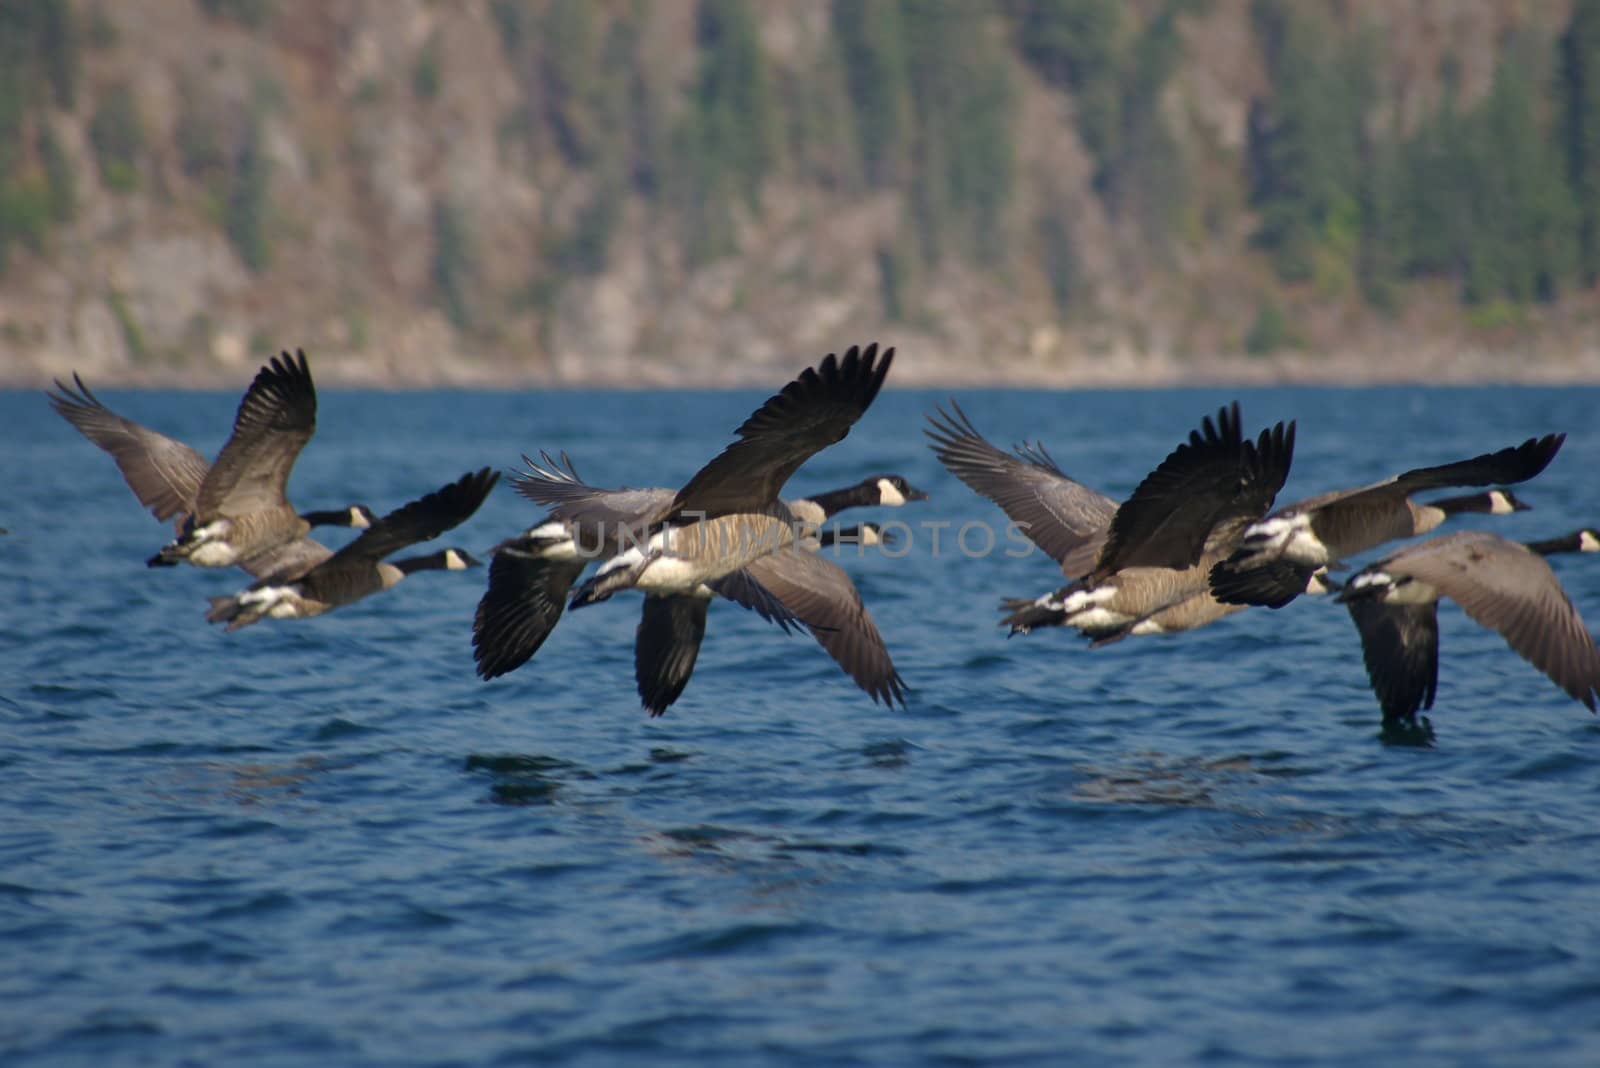 Canada Geese B by photocdn39